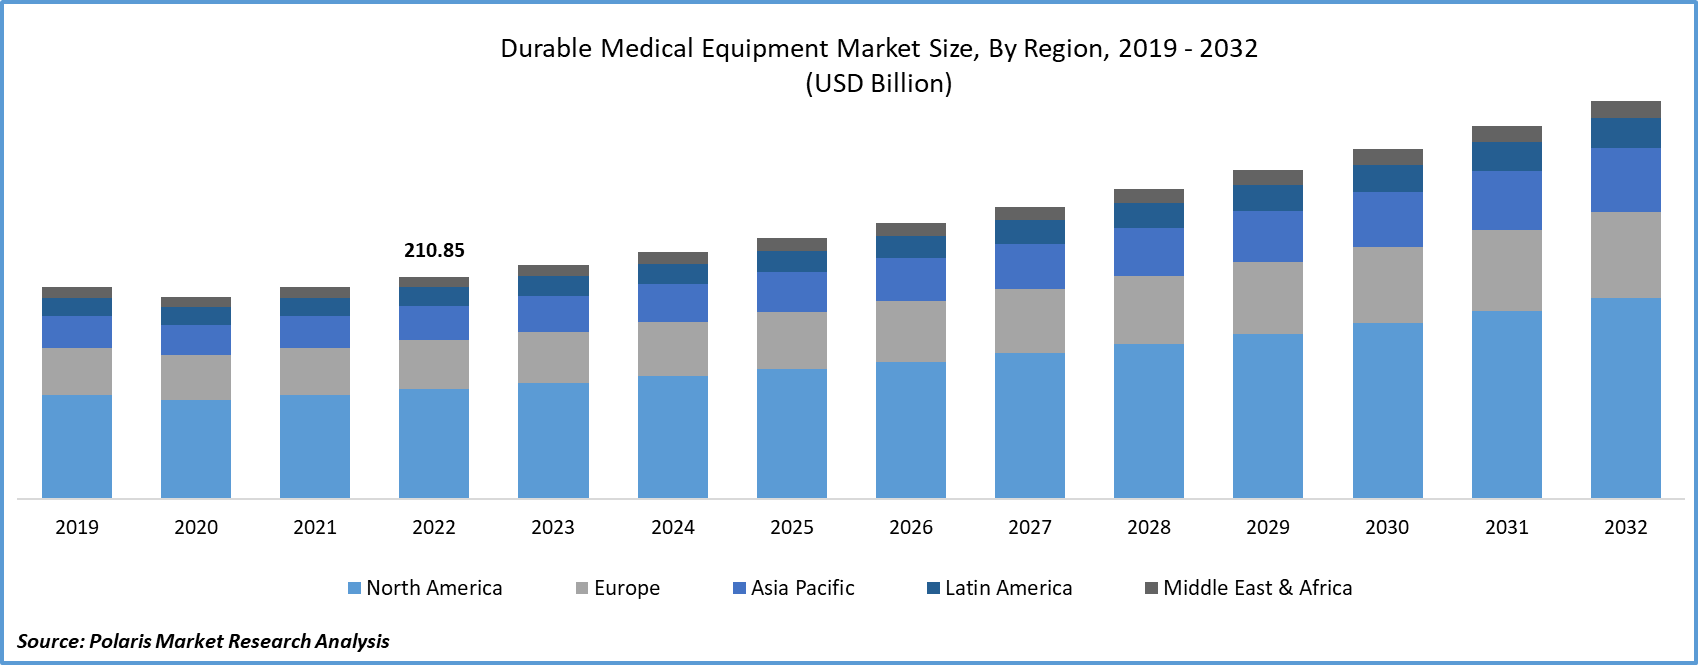 Durable Medical Equipment Market Size